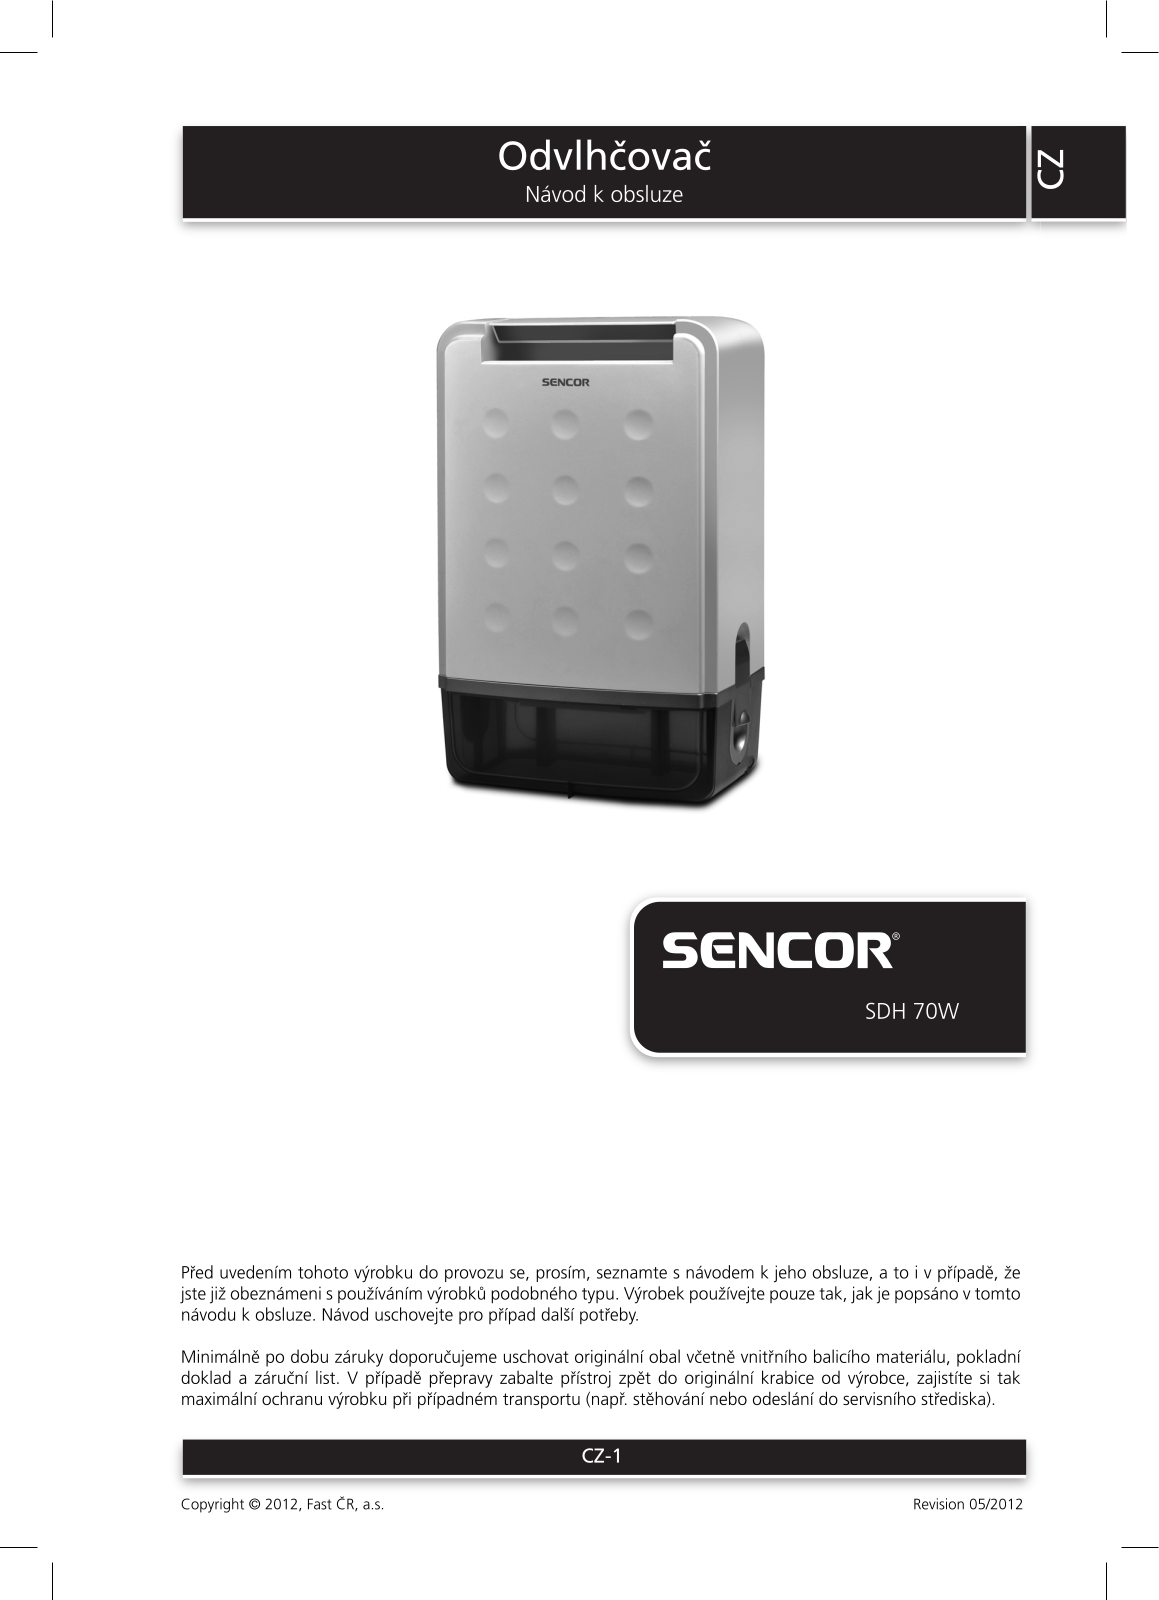 Sencor SDH 70W User Manual